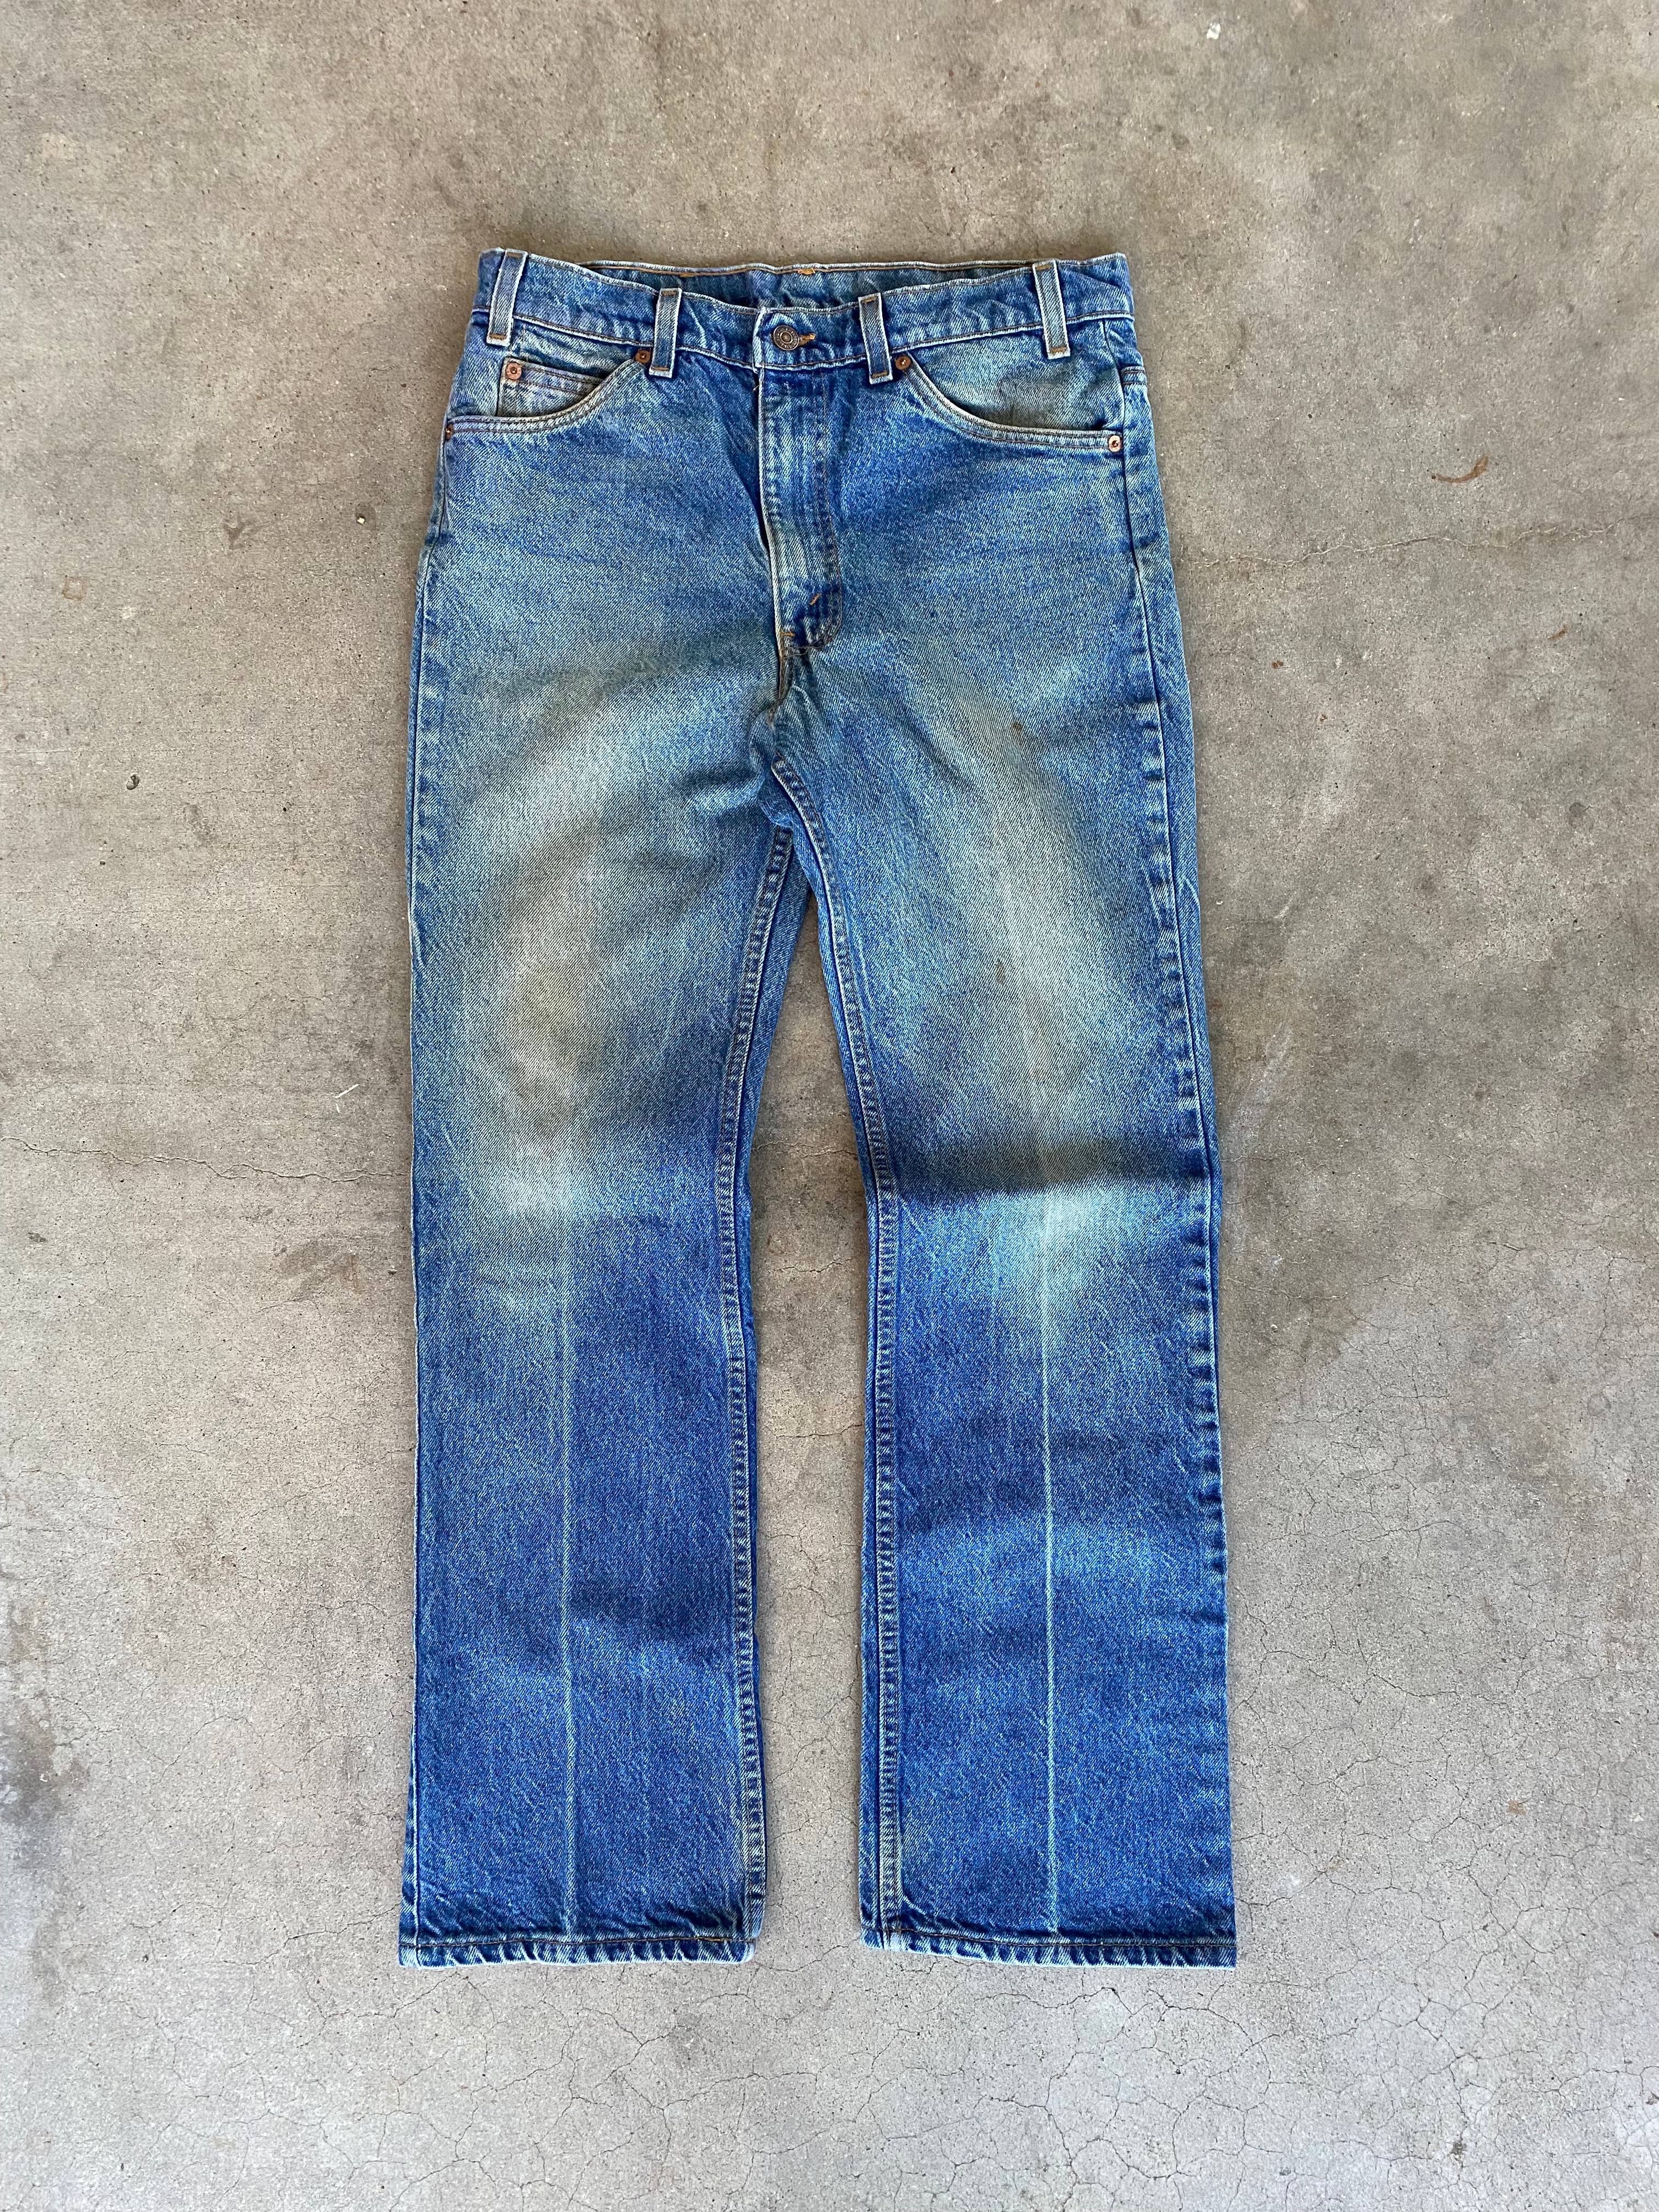 1996 Levi’s 517 Orange Tab Bootcut Flare Jeans (33"x30")